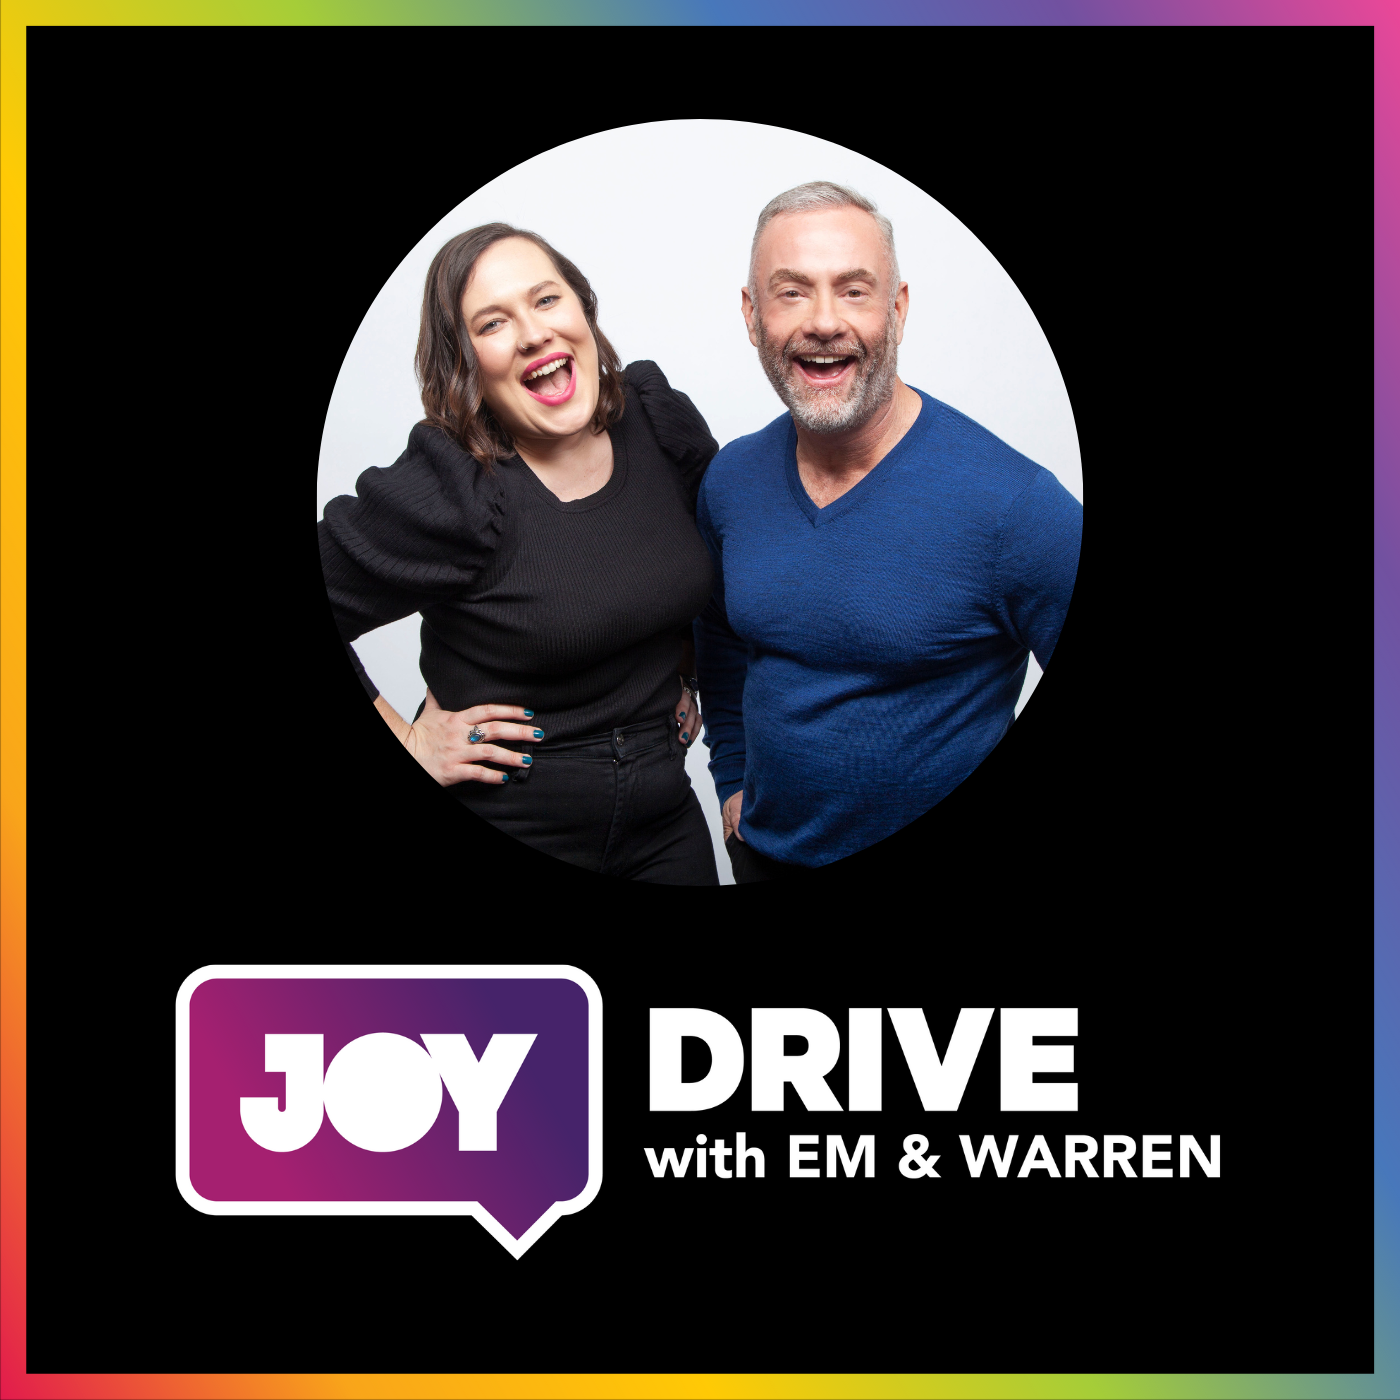 Syd Brisbane x JOY Drive: Much Ado About Nothing